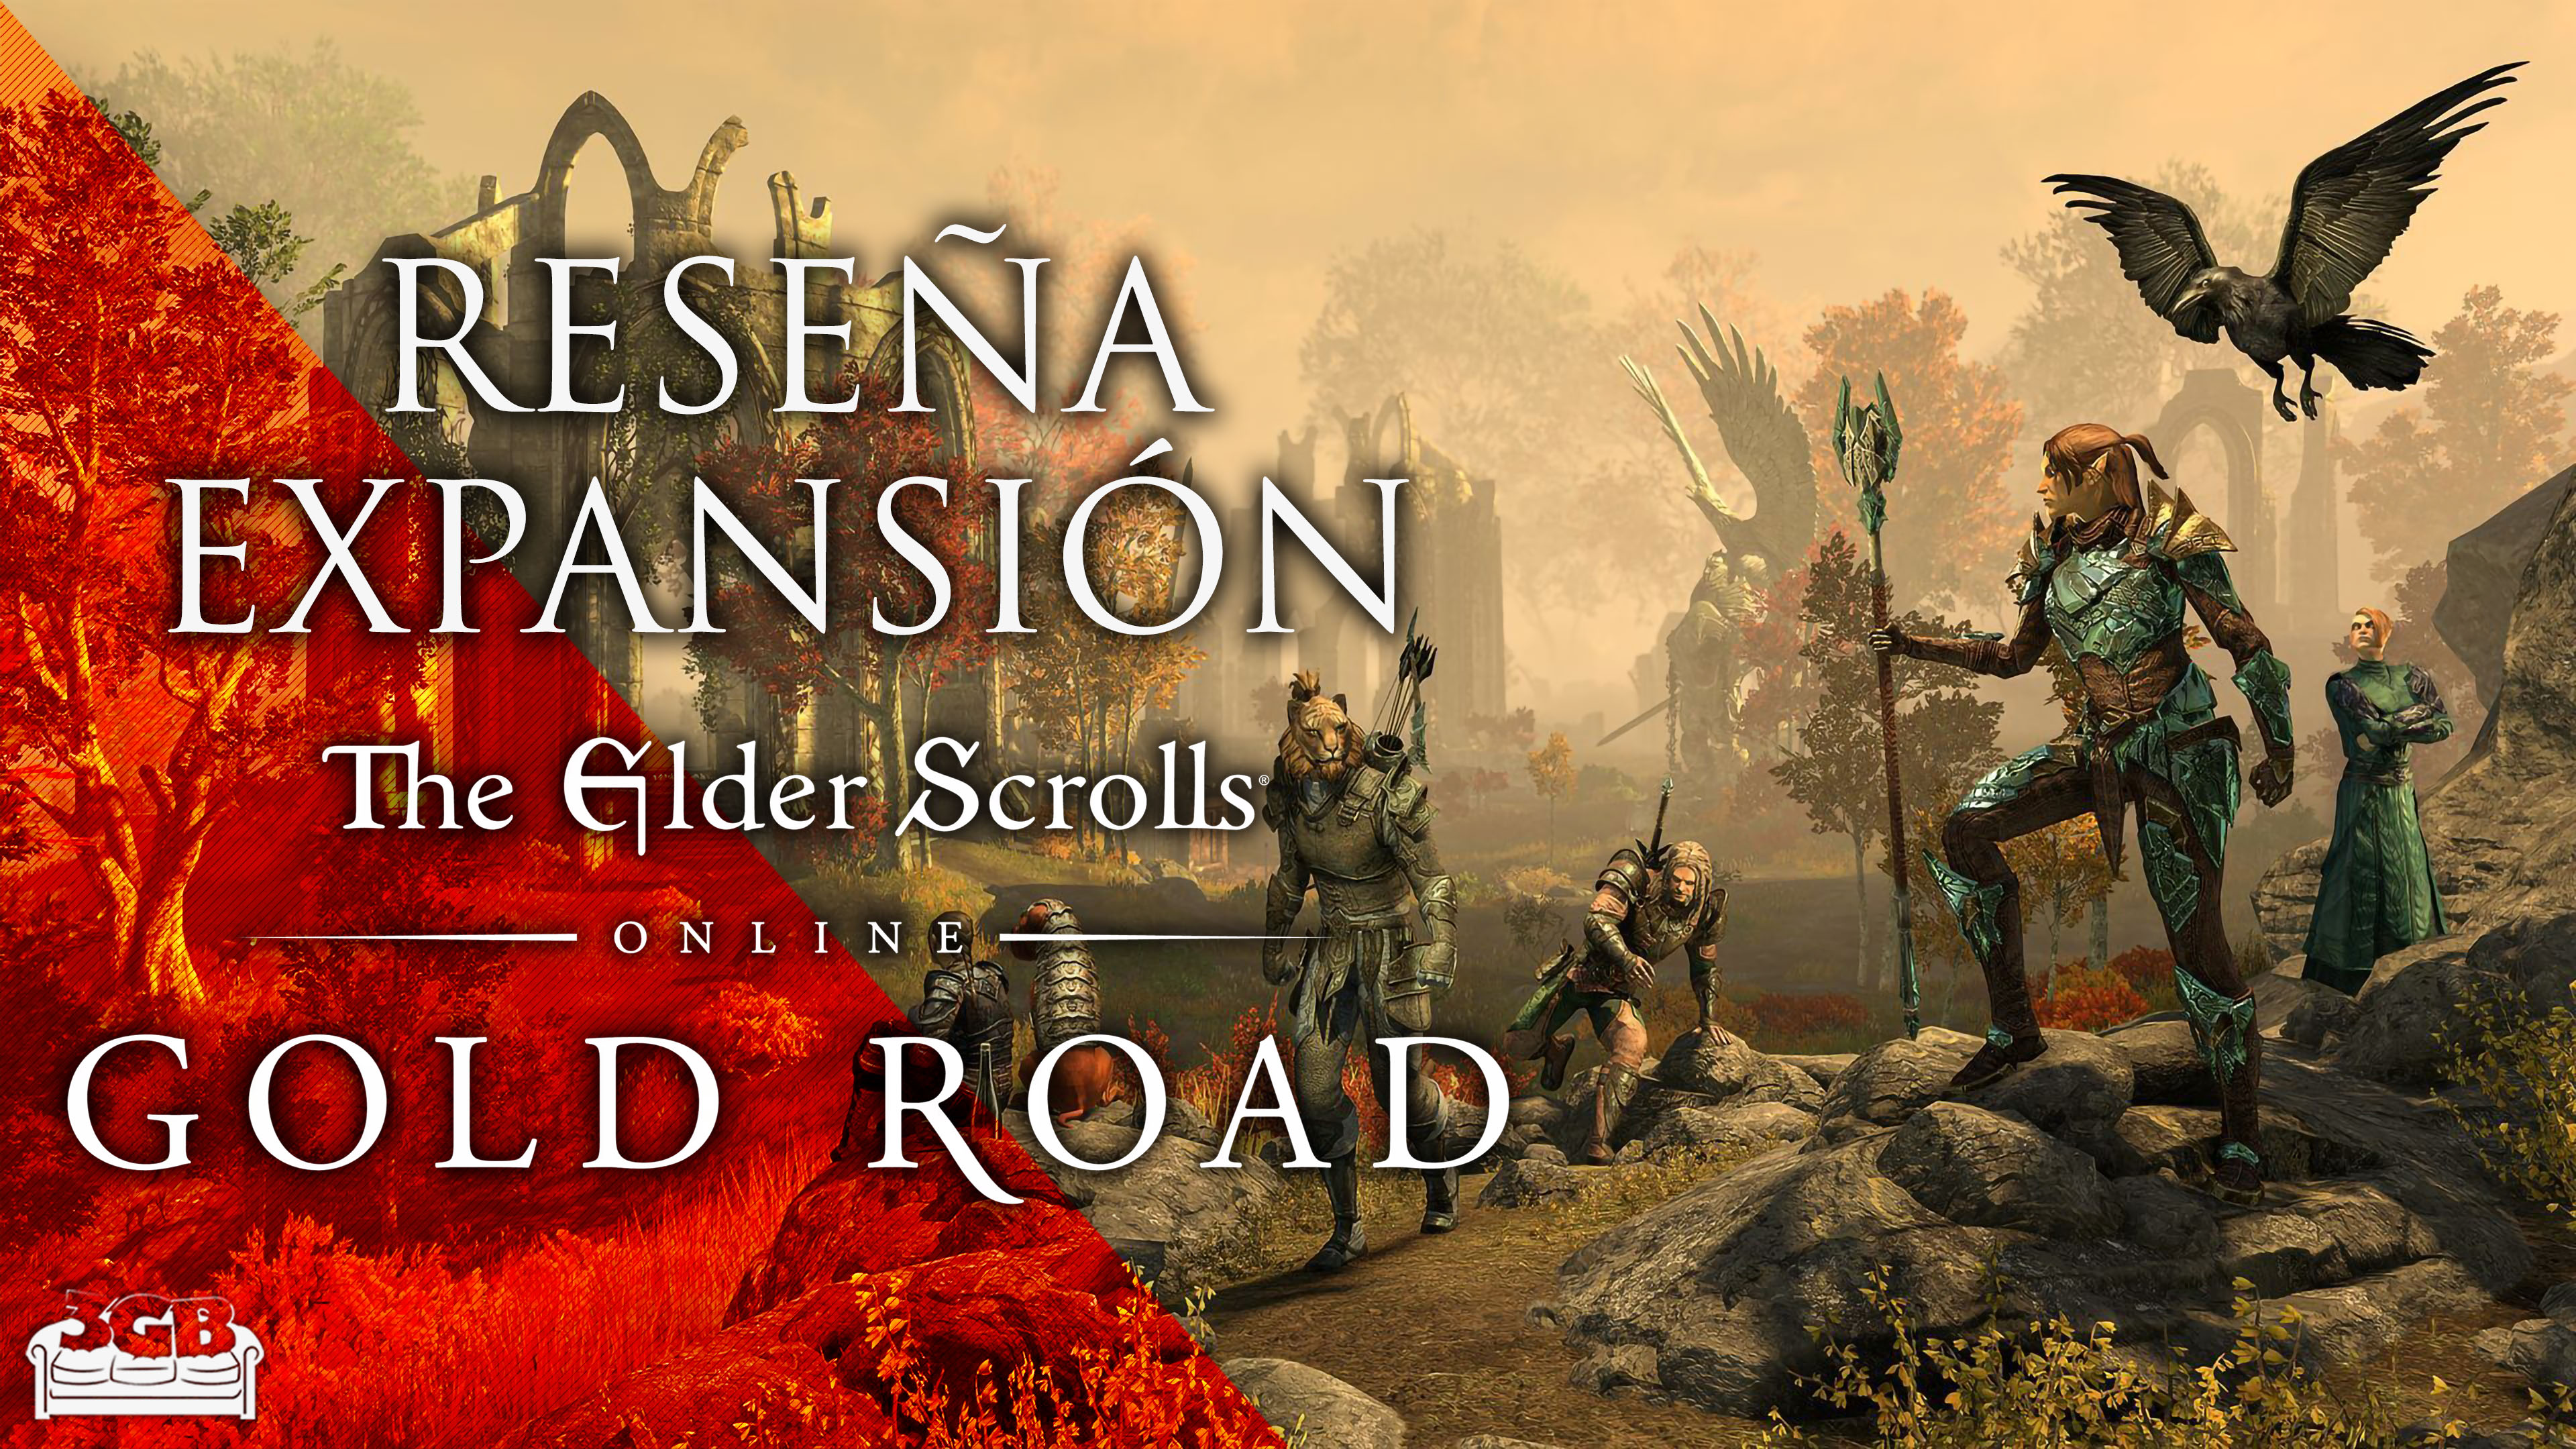 Reseña Expansión The Elder Scrolls Online: Gold Road – Extrañamente familiar